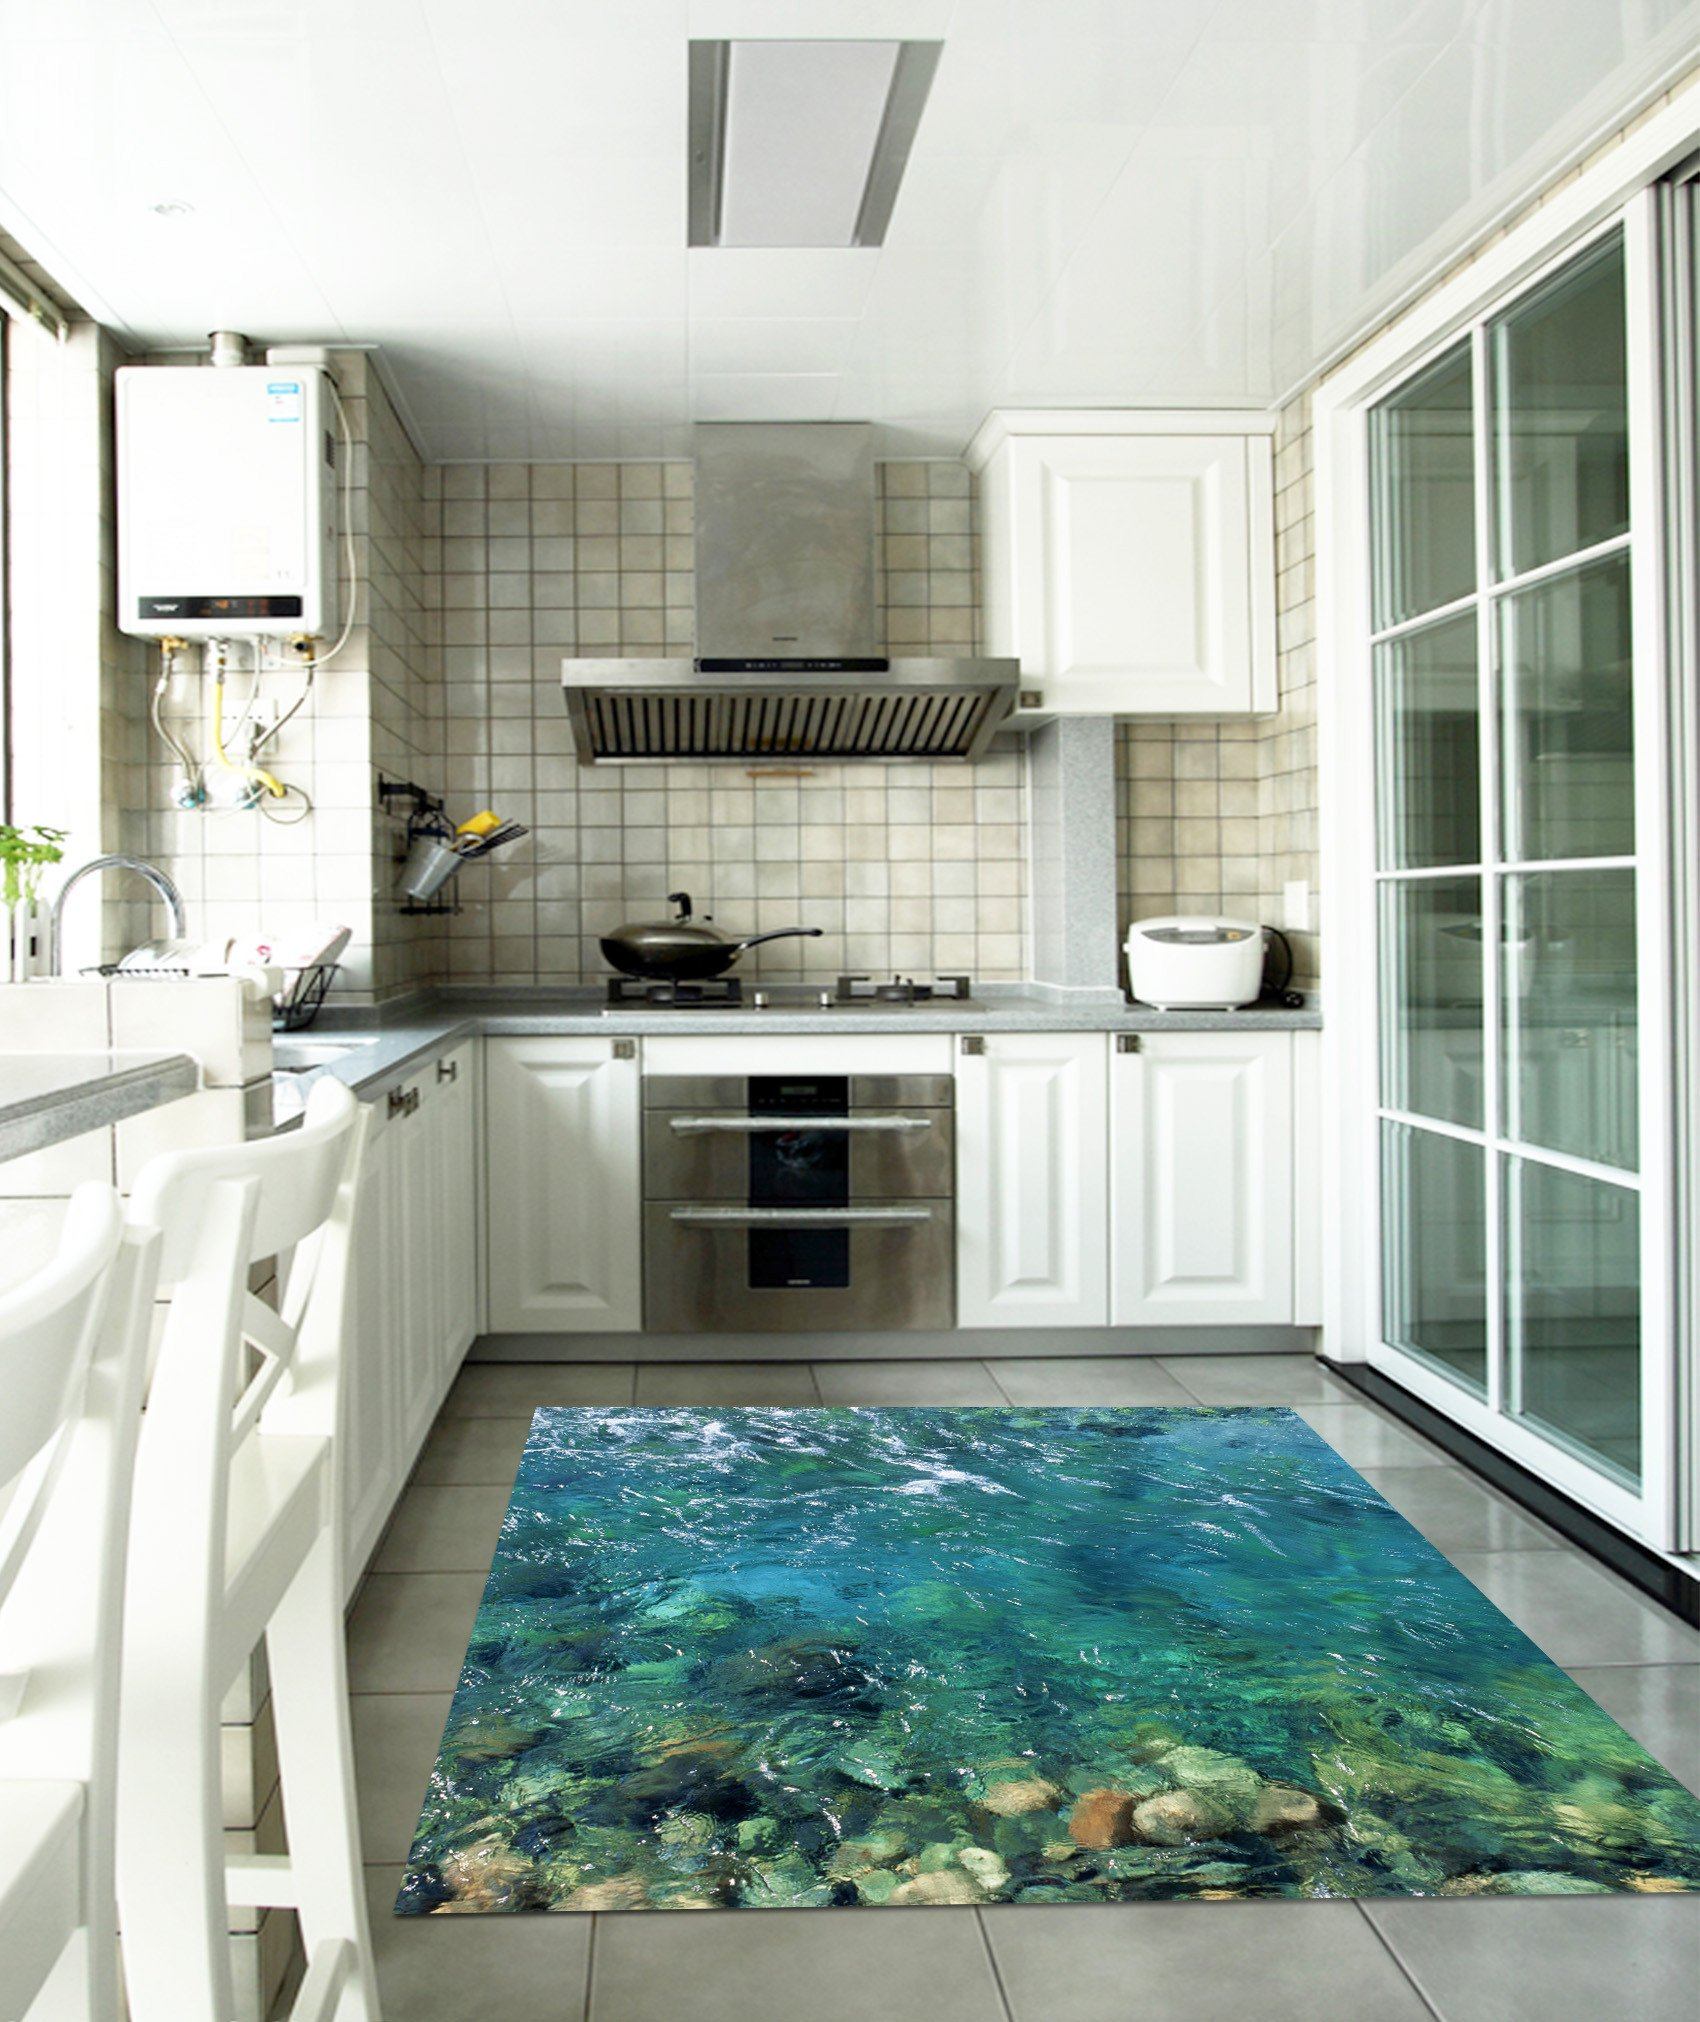 3D Flowing Water Kitchen Mat Floor Mural Wallpaper AJ Wallpaper 